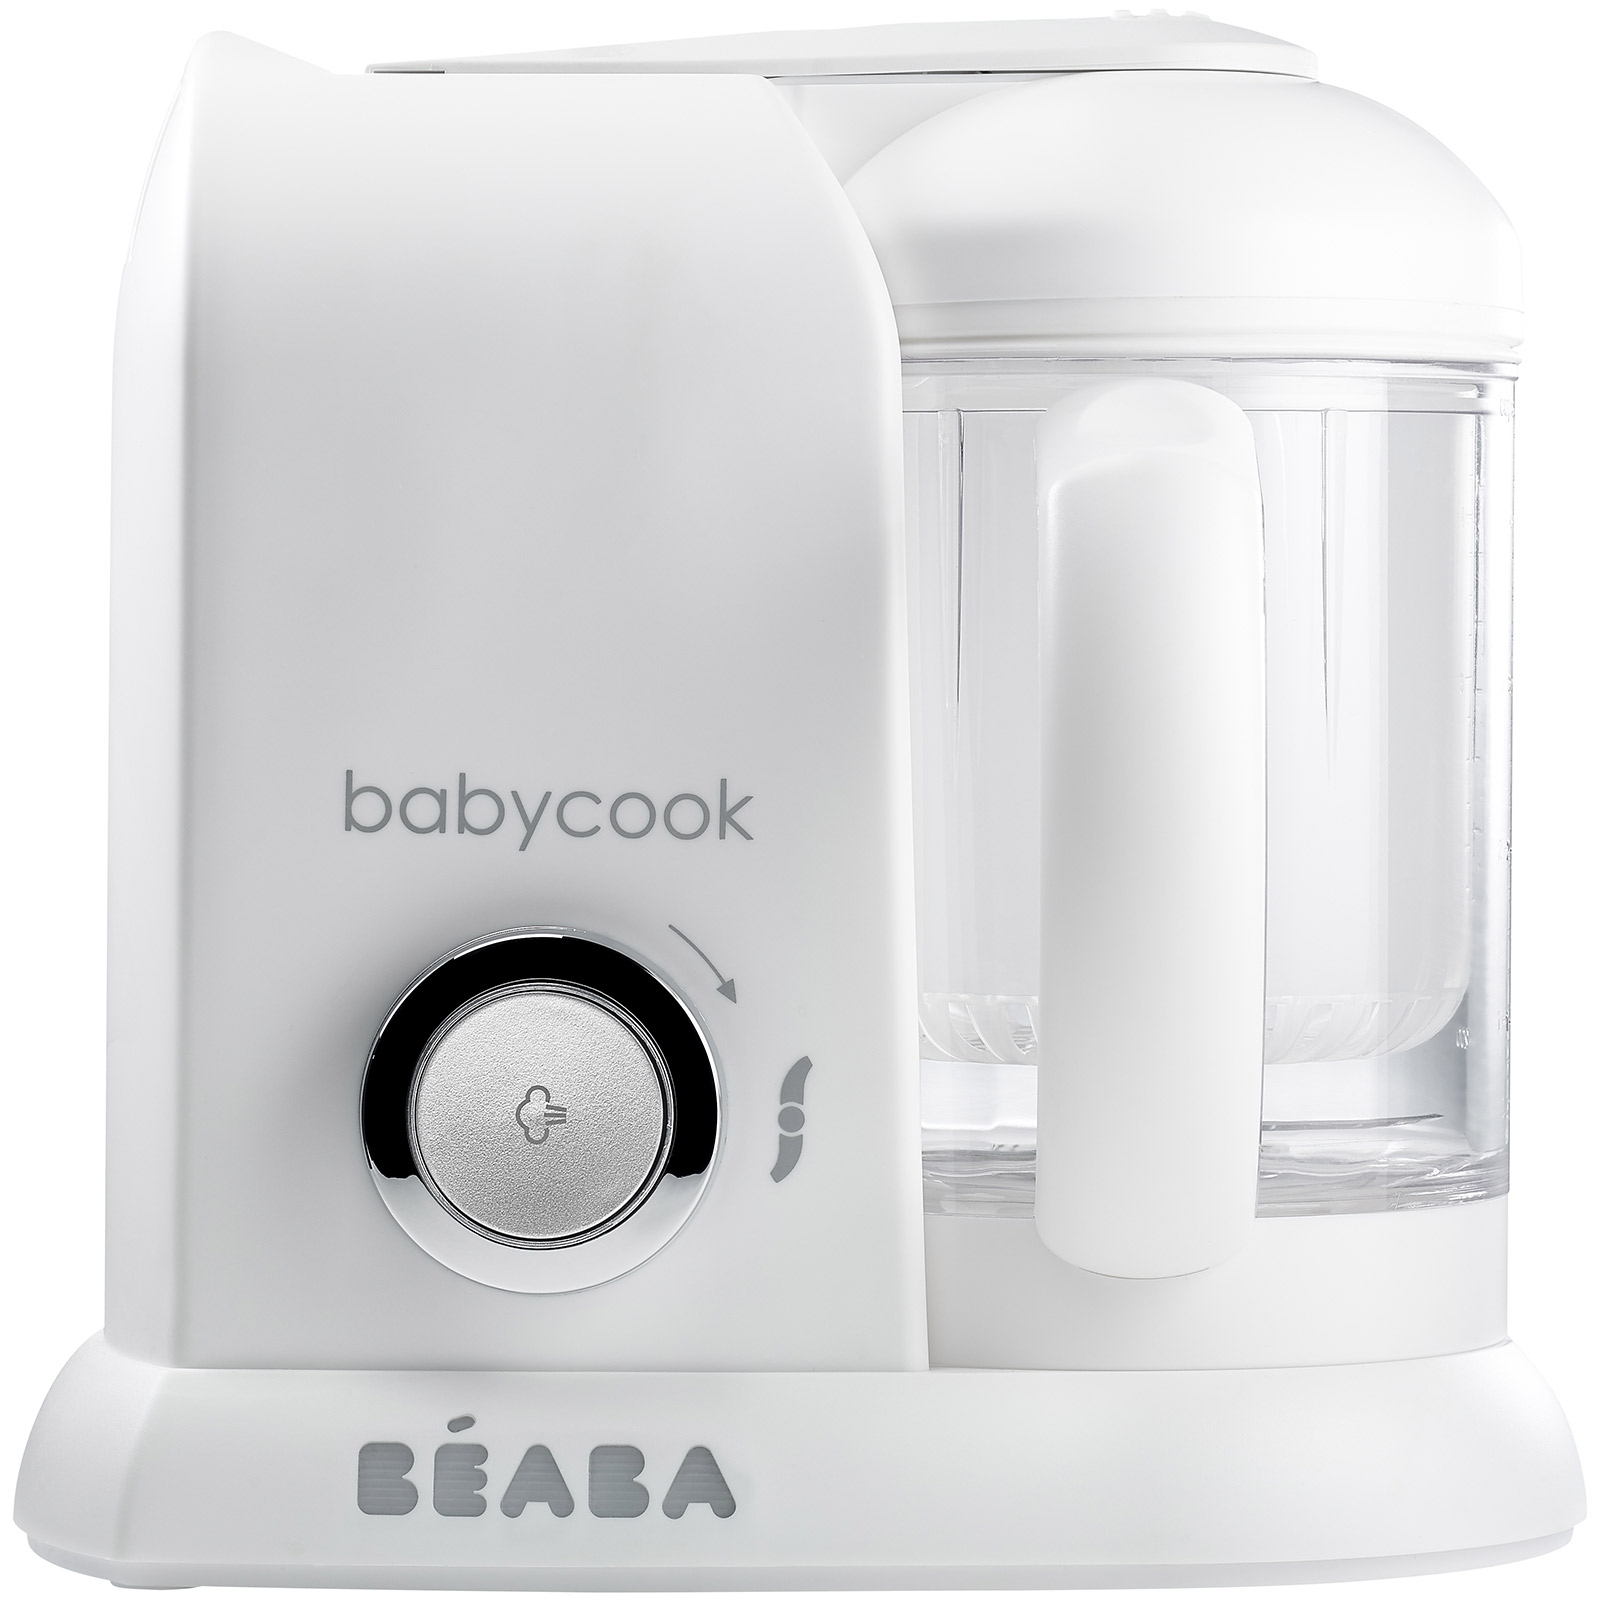 Robot cuiseur Babycook Solo blanc (Béaba) - Image 4